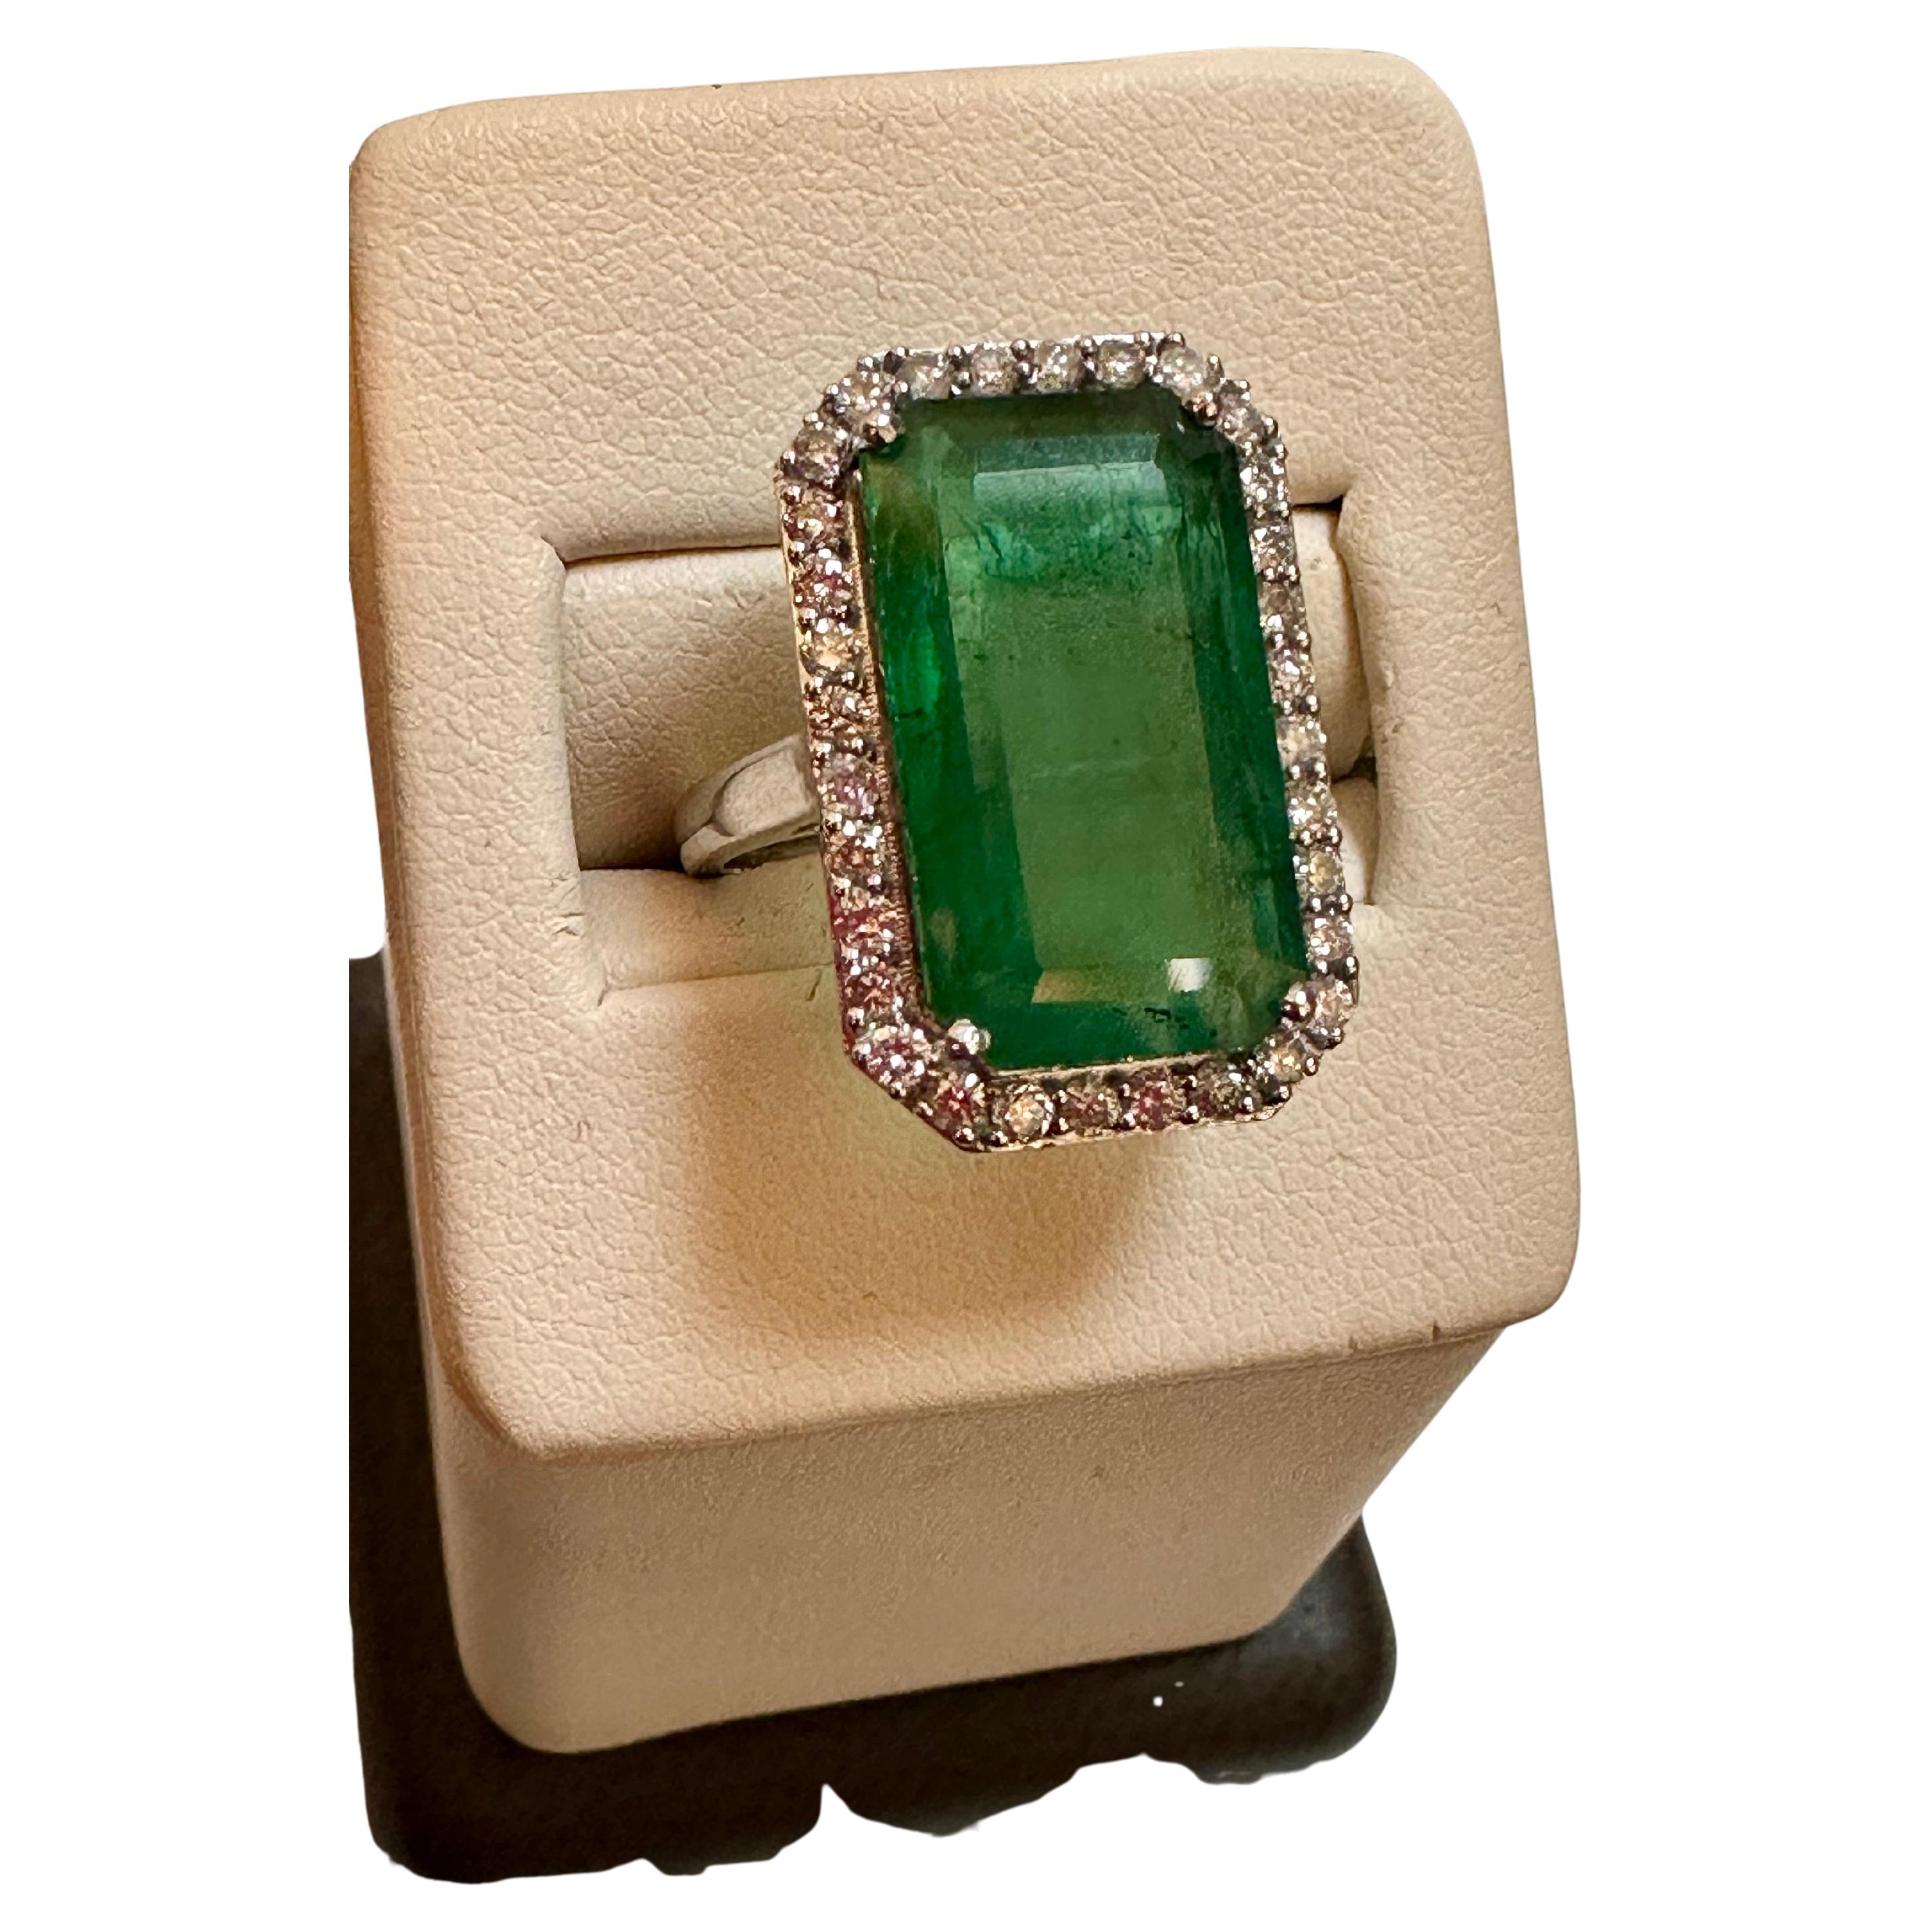 Natural 9 Carat Emerald Cut Zambian Emerald & Diamond Ring in 14Kt  White Gold
A classic design  ring , Ring Size 6.75
Exact 9 Carat  Emerald Cut Emerald Absolutely gorgeous emerald , Very desirable color .
Origin Zambia
14 Karat white gold   6.6 gm